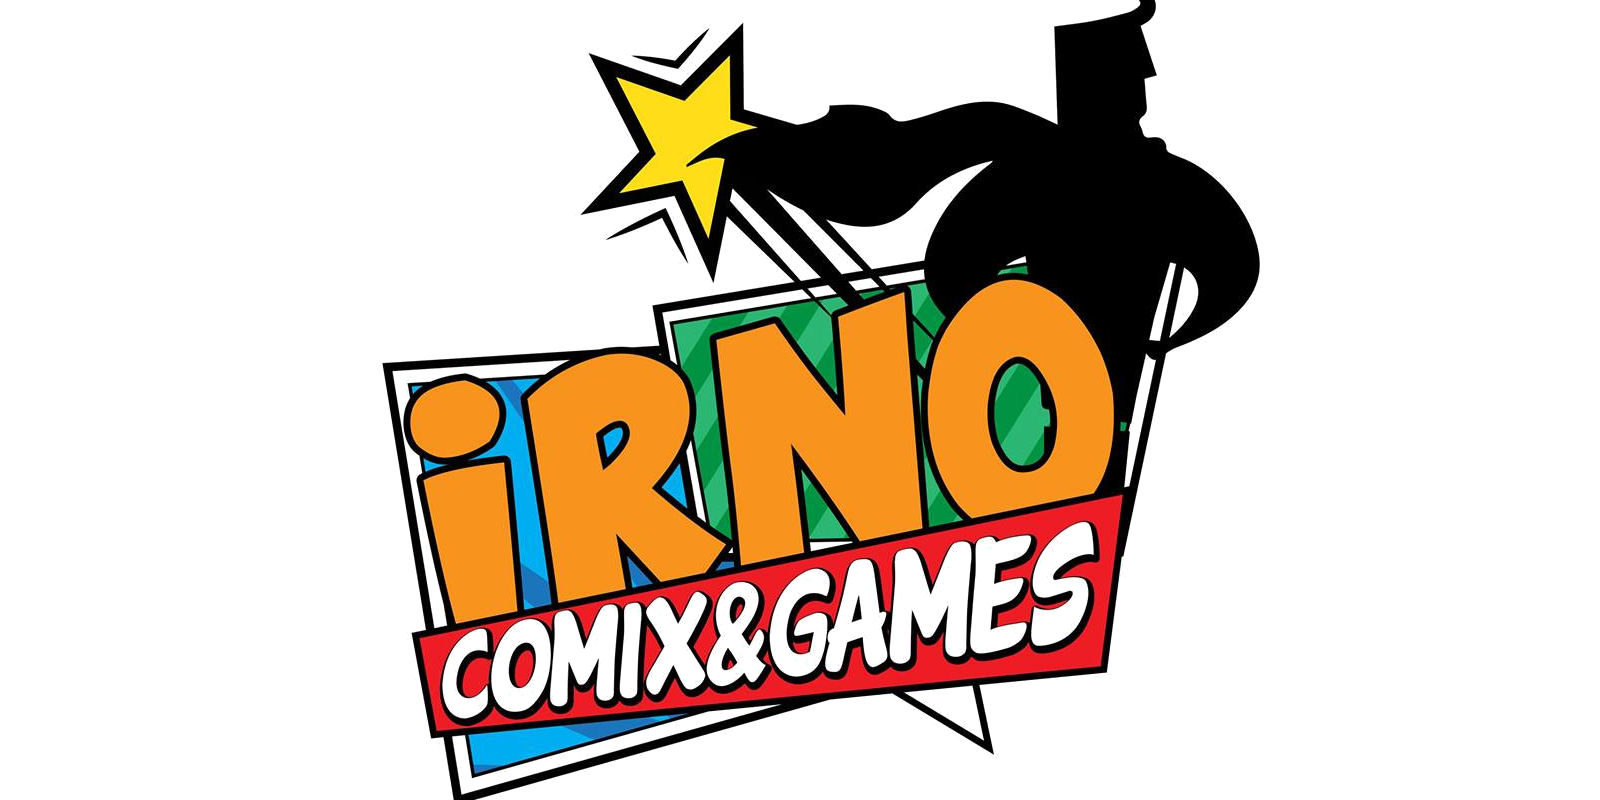 Irno Comix & Games 2017